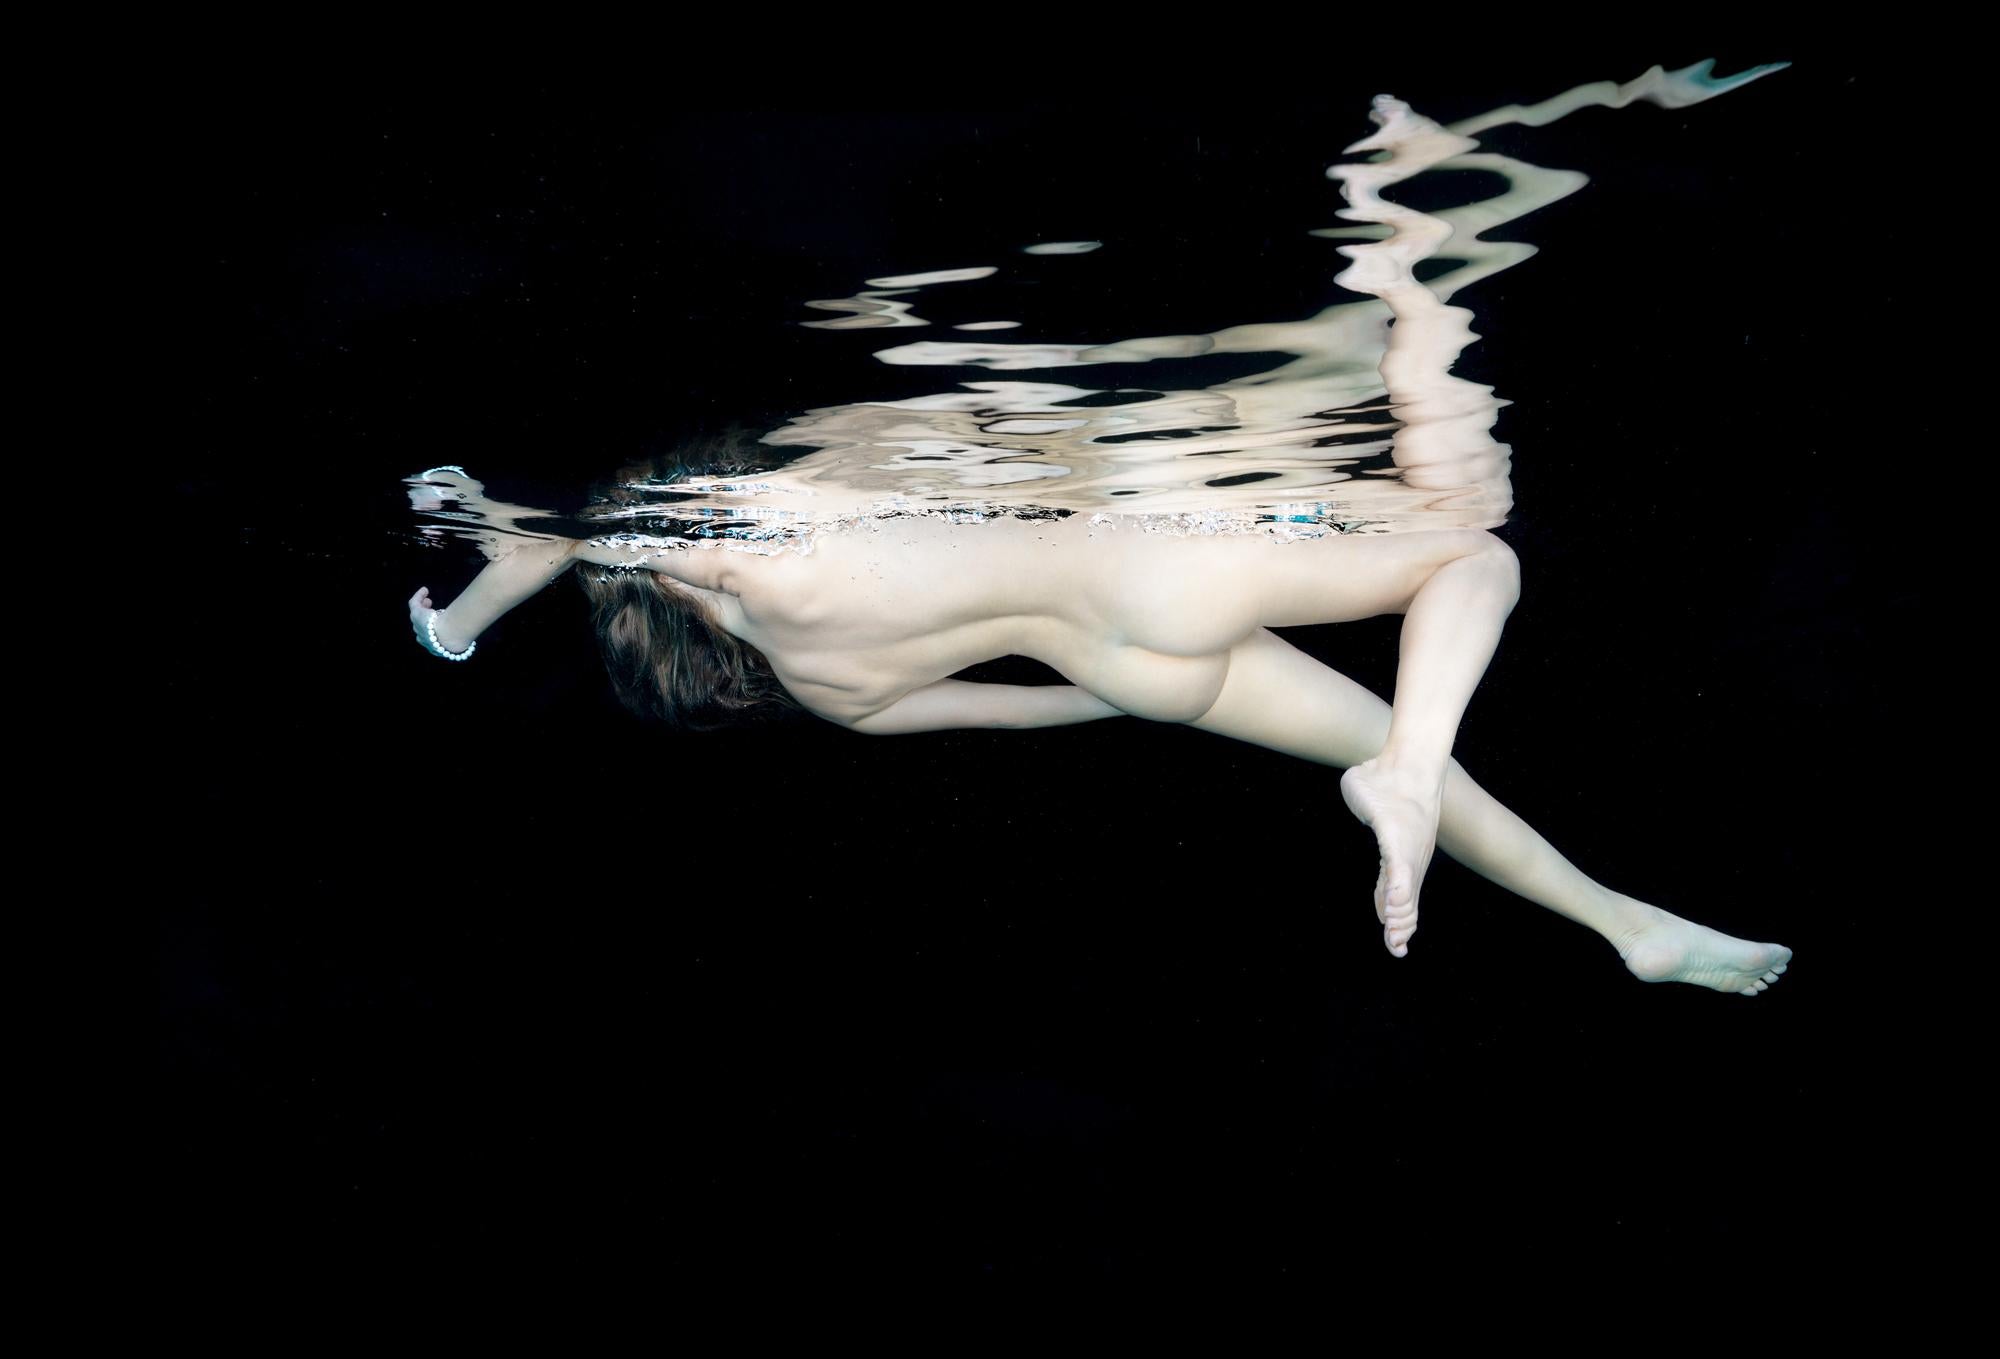 Porcelain II  - underwater nude photograph - print on aluminum 24x36"